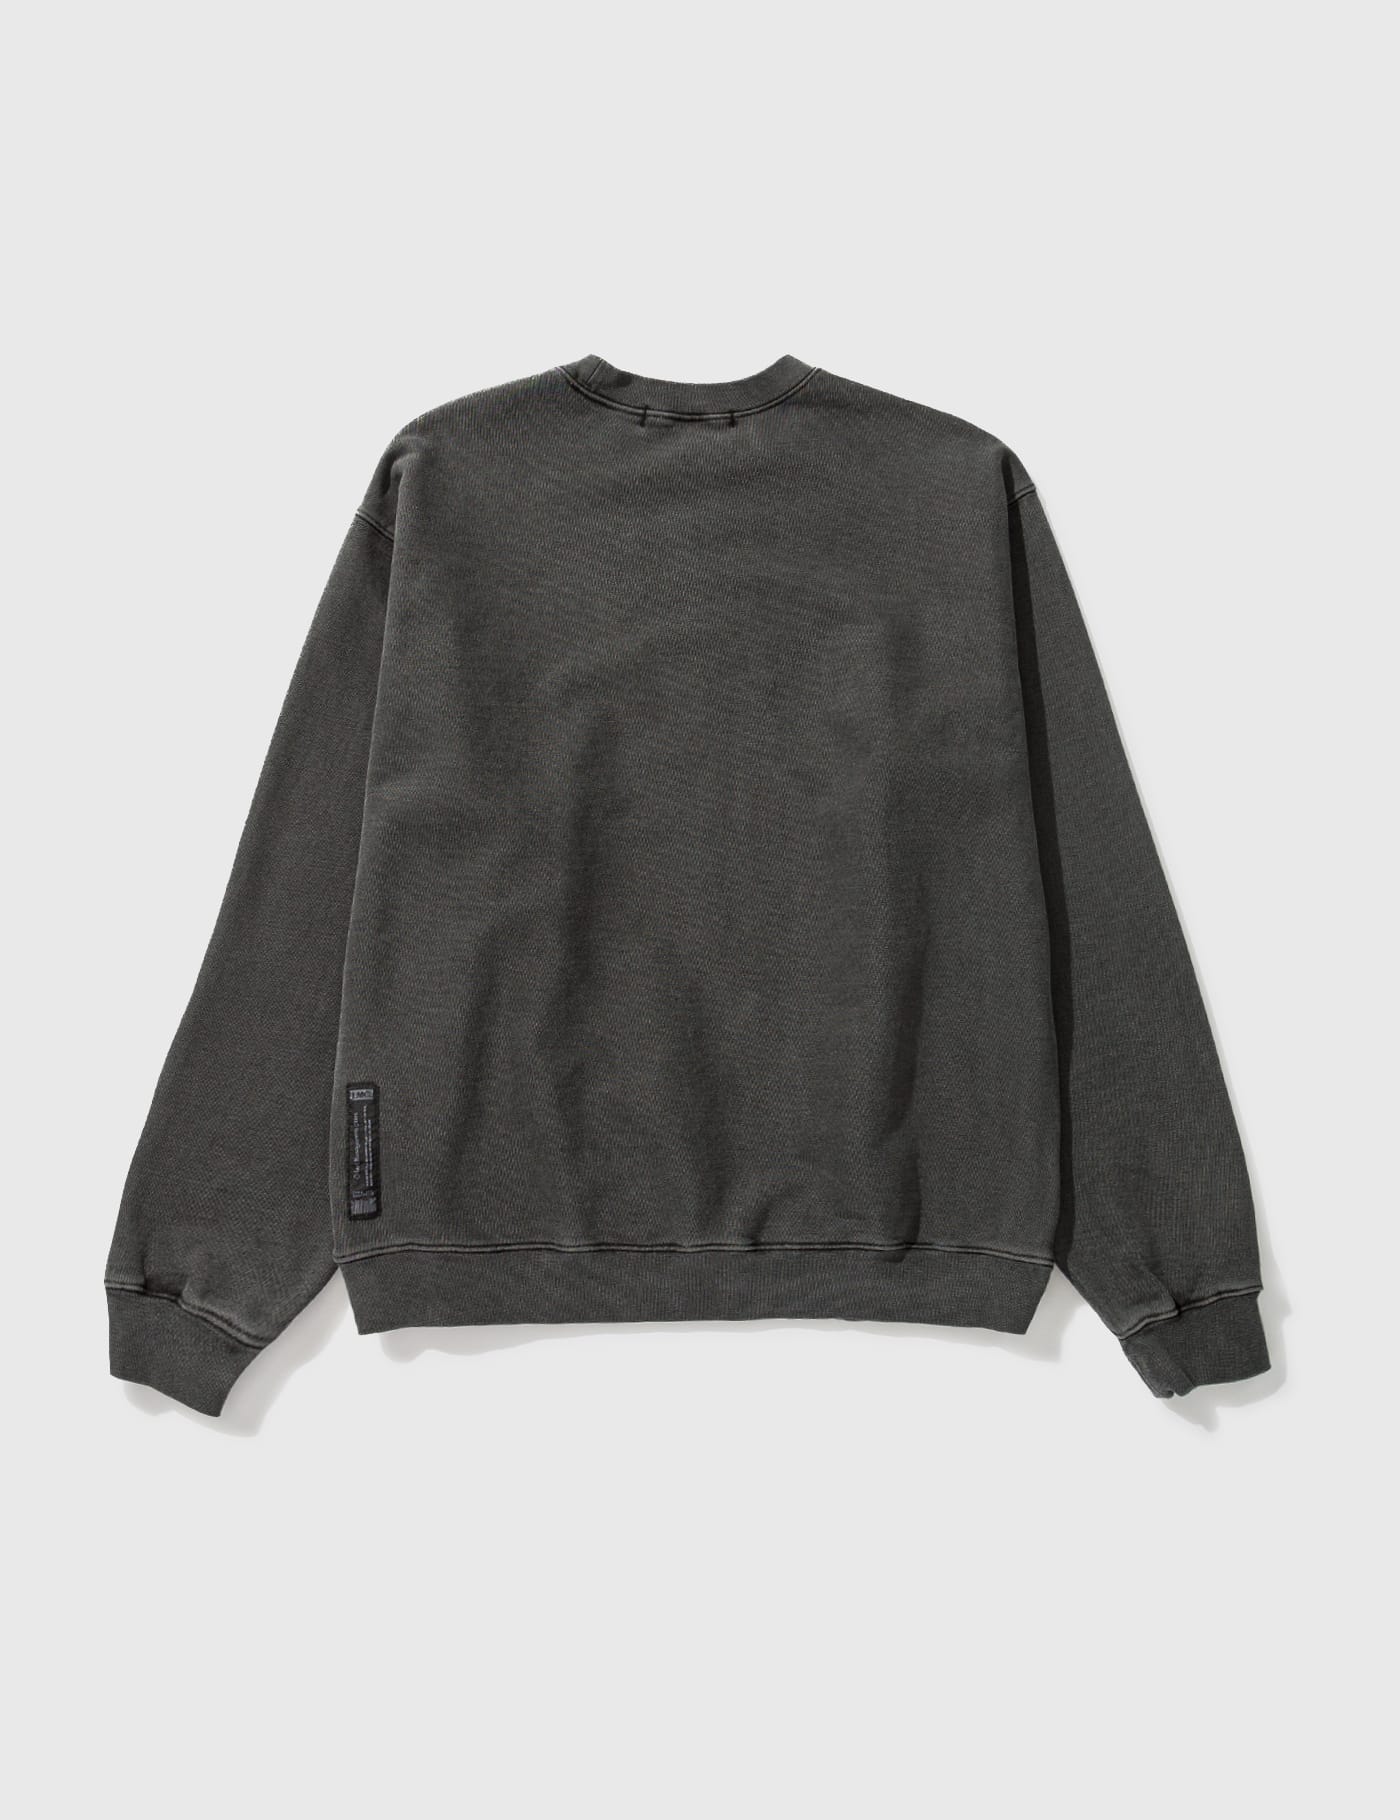 LMC - Overdyed Tarot Sweatshirt | HBX - HYPEBEAST 為您搜羅全球潮流時尚品牌